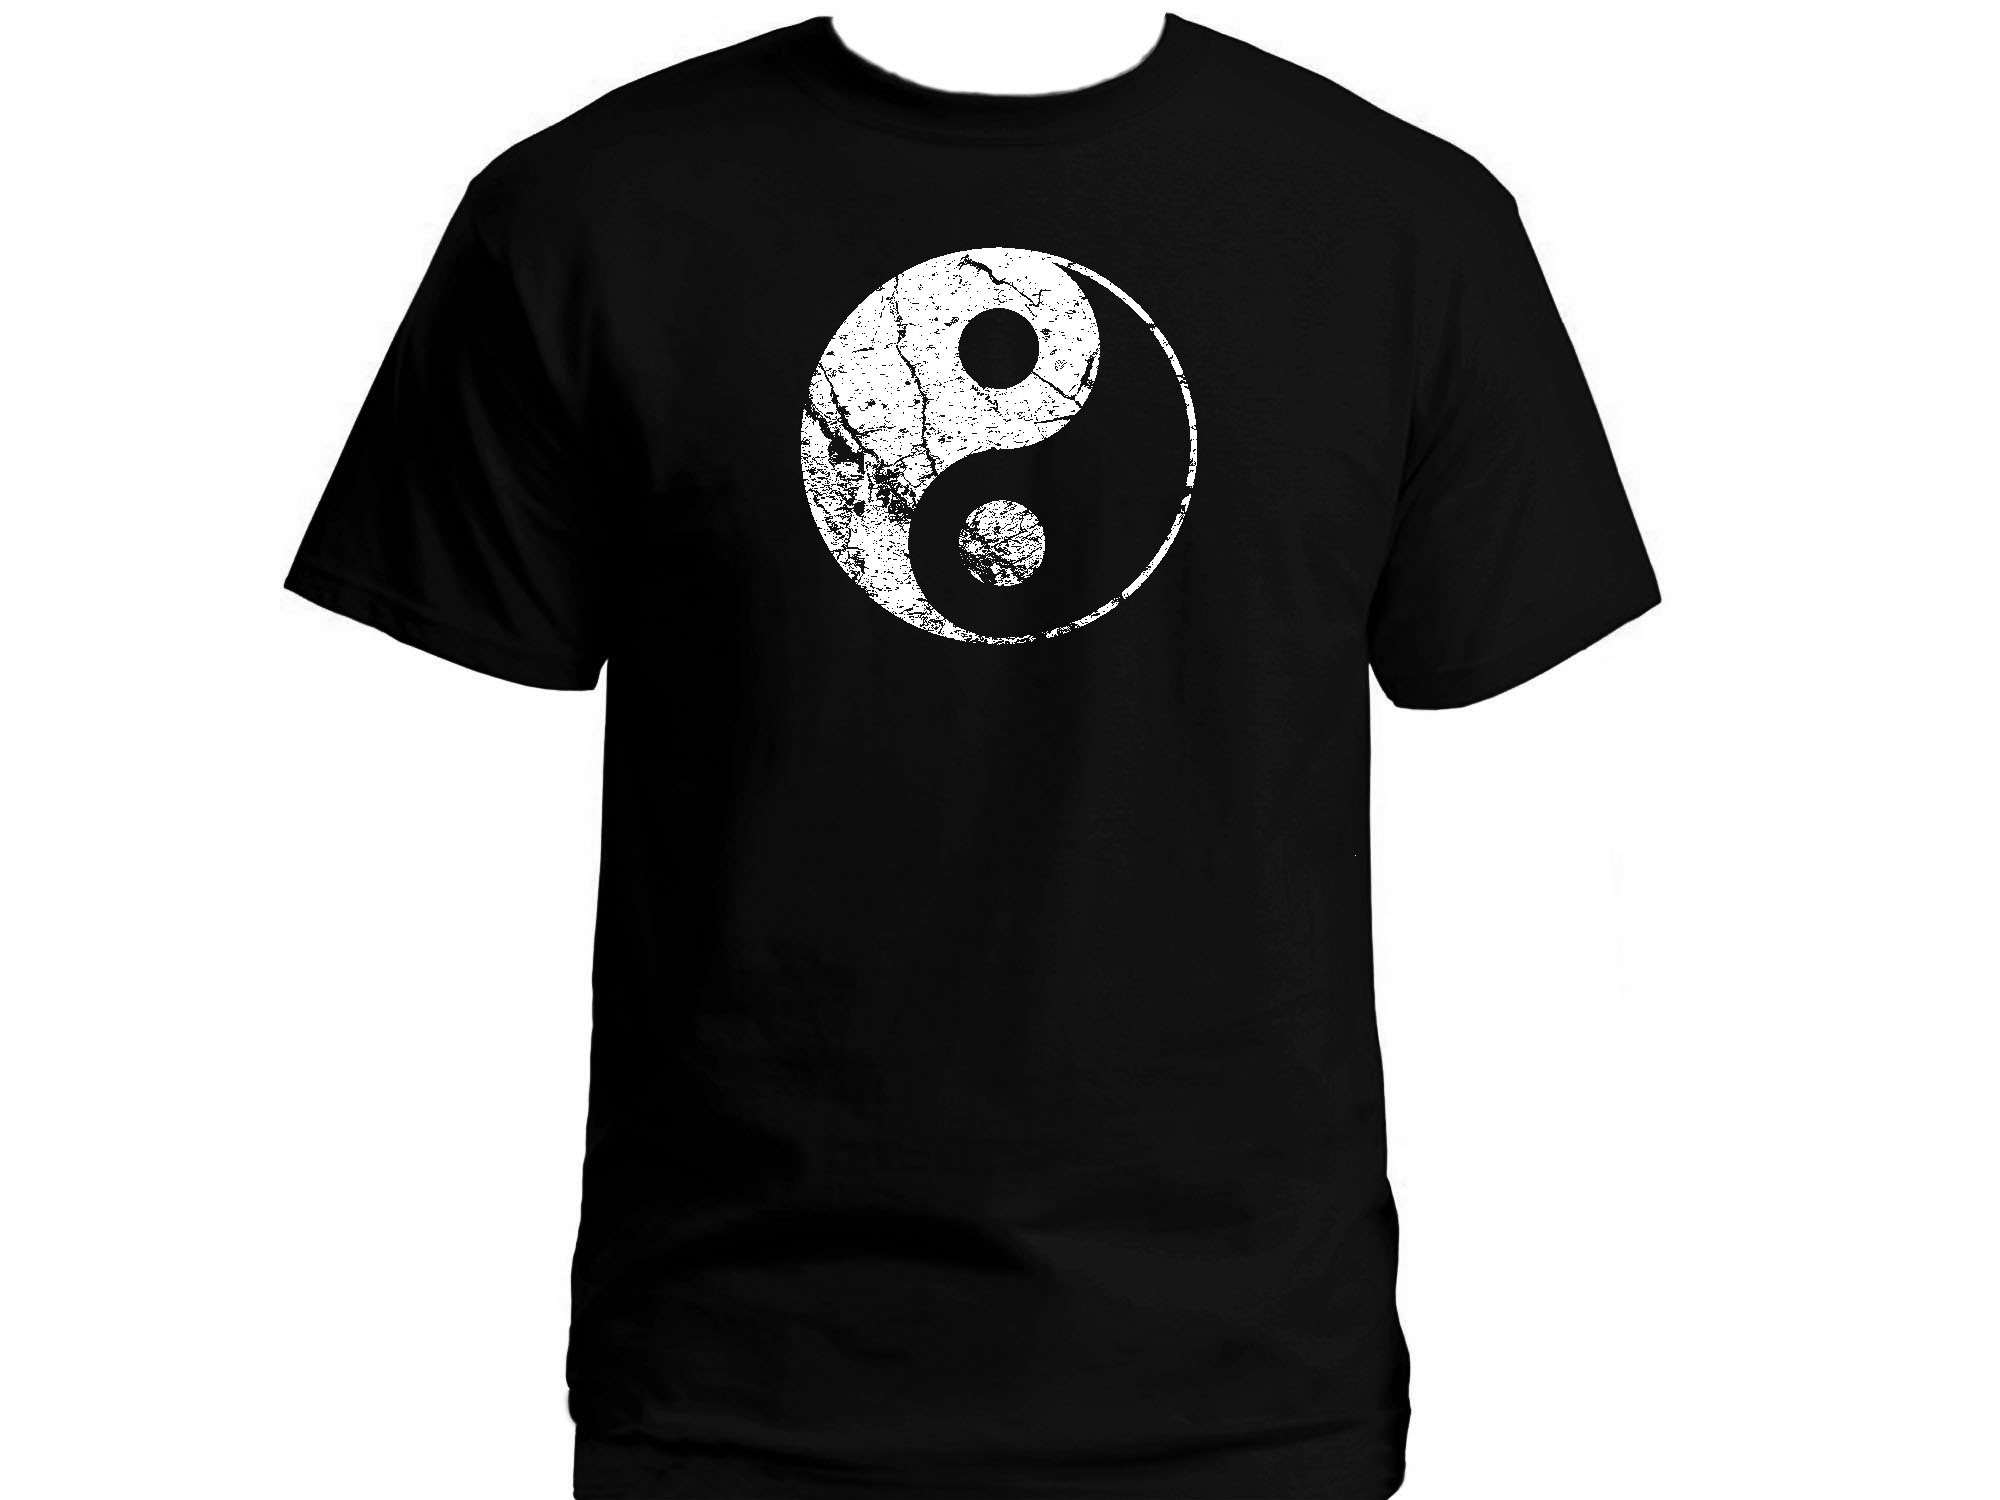 Yin Yang distressed look customized t-shirt